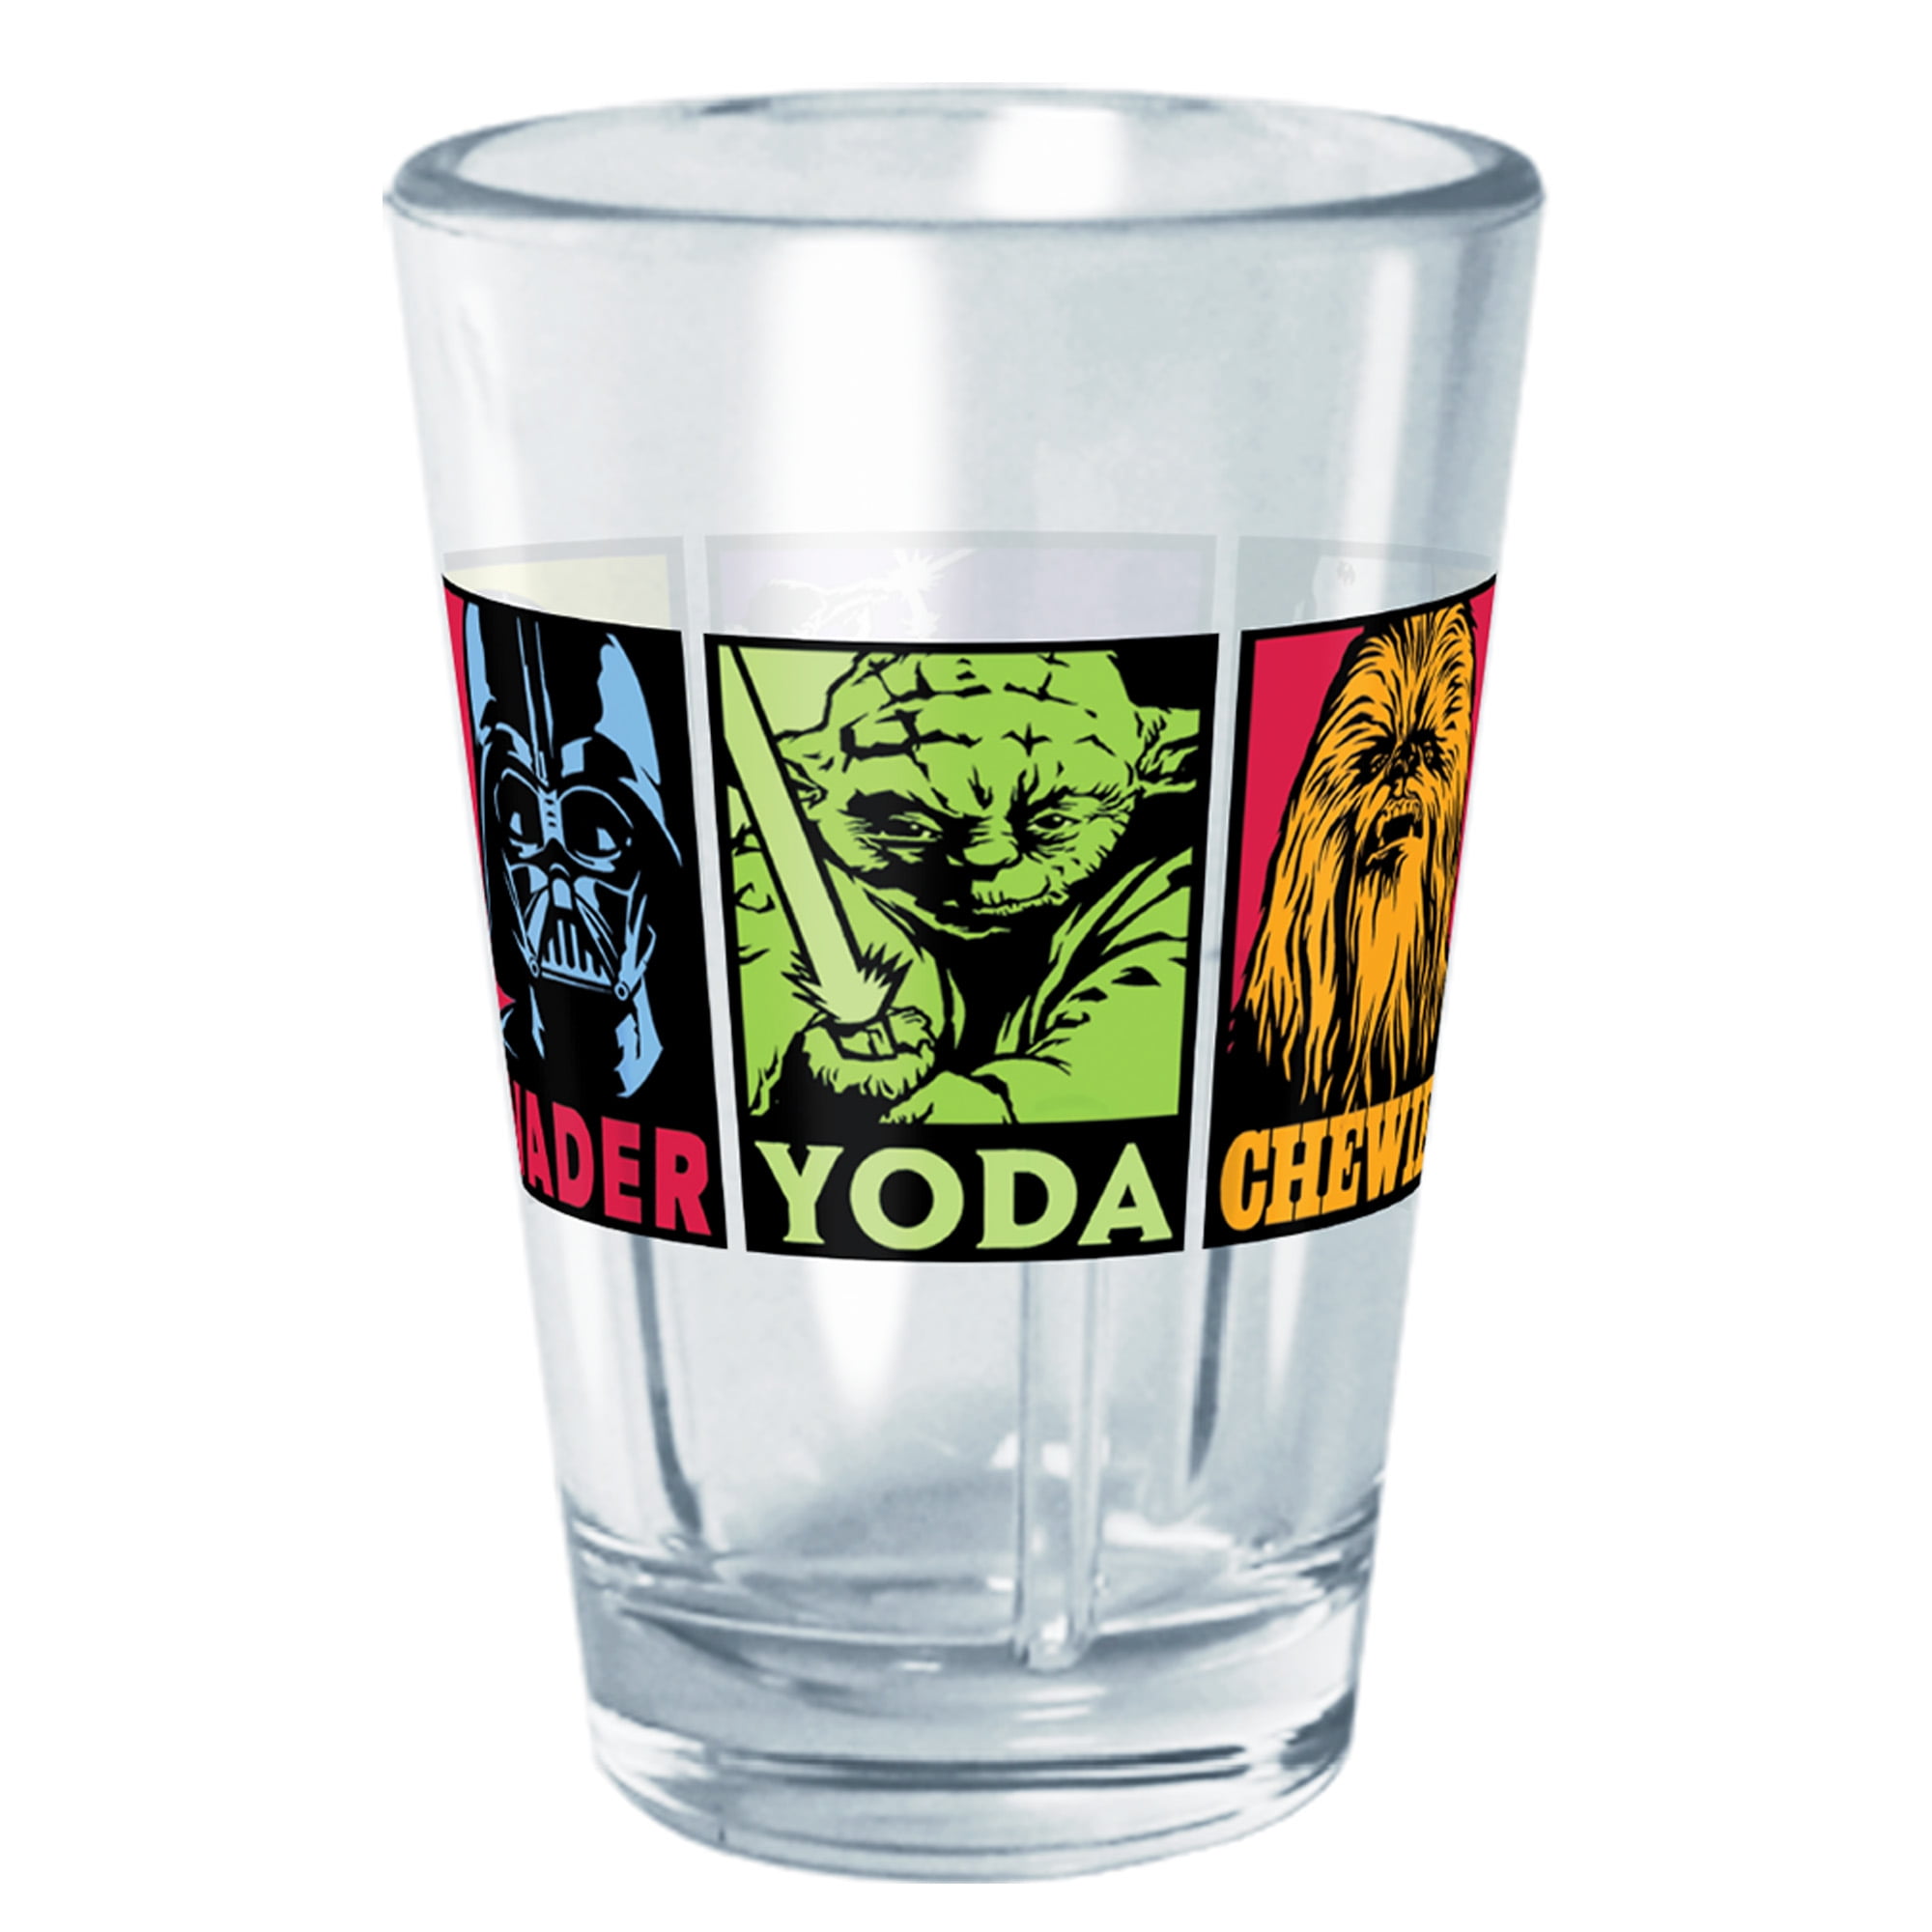 Star Wars Vintage Victory 2-oz. Tritan Shot Glass, Multicolor